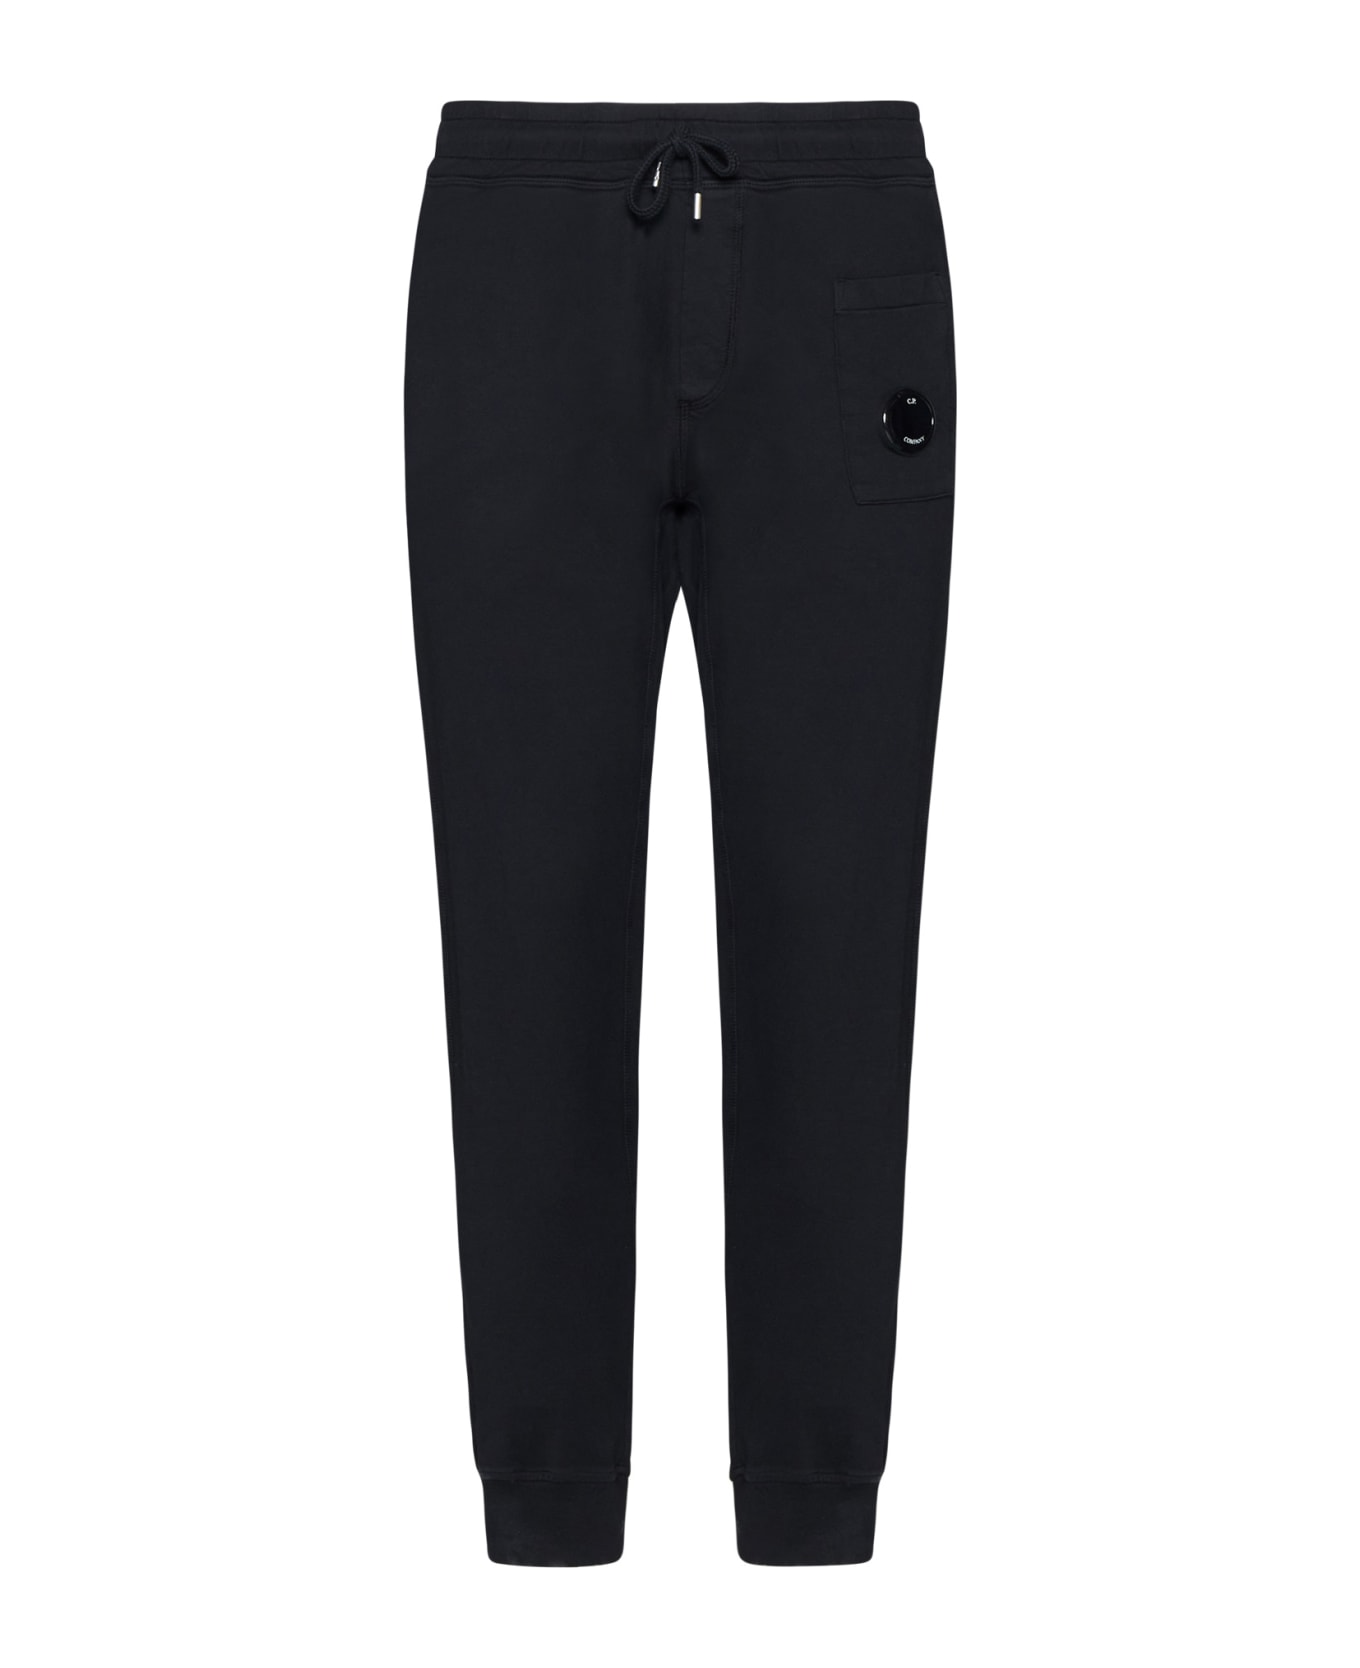 C.P. Company Cotton Sweatpants - Black